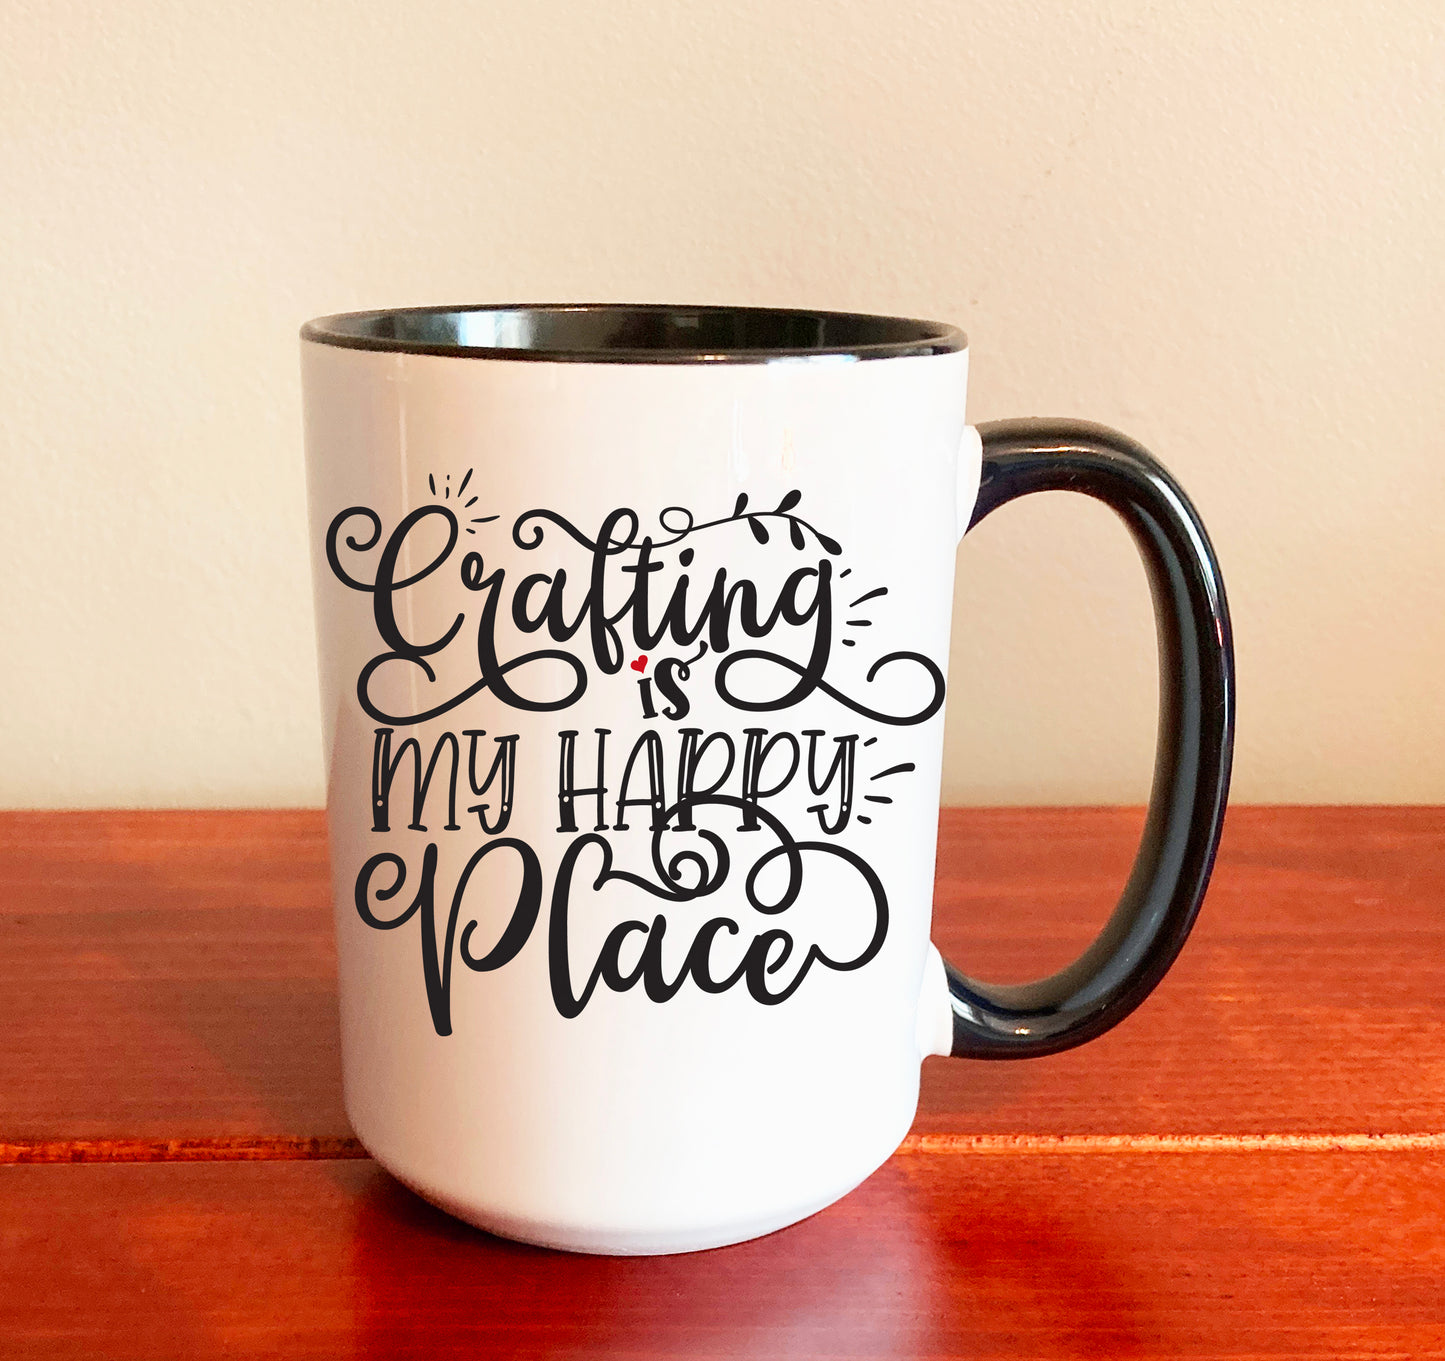 Crafting is My Happy Place -  Mug